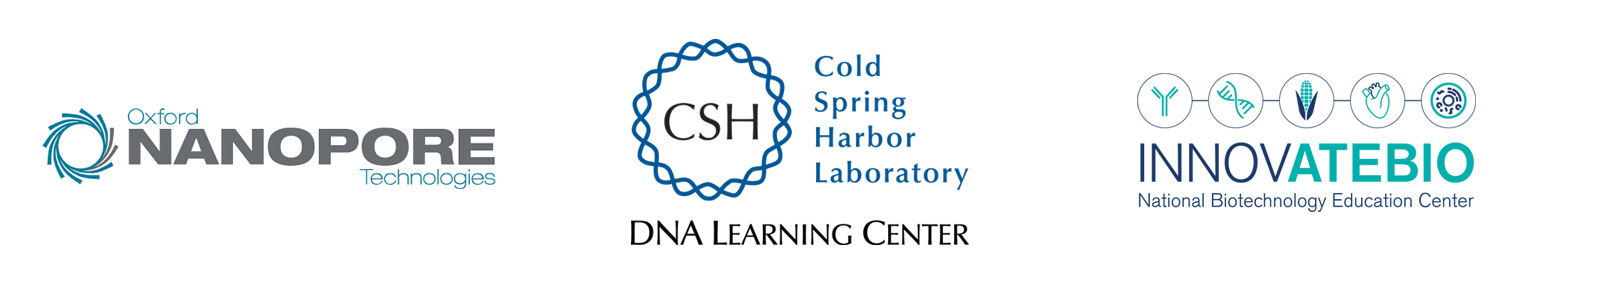 Logo of Oxford Nanopore, CSHL DNA Learning Center, and InnovATEBIO